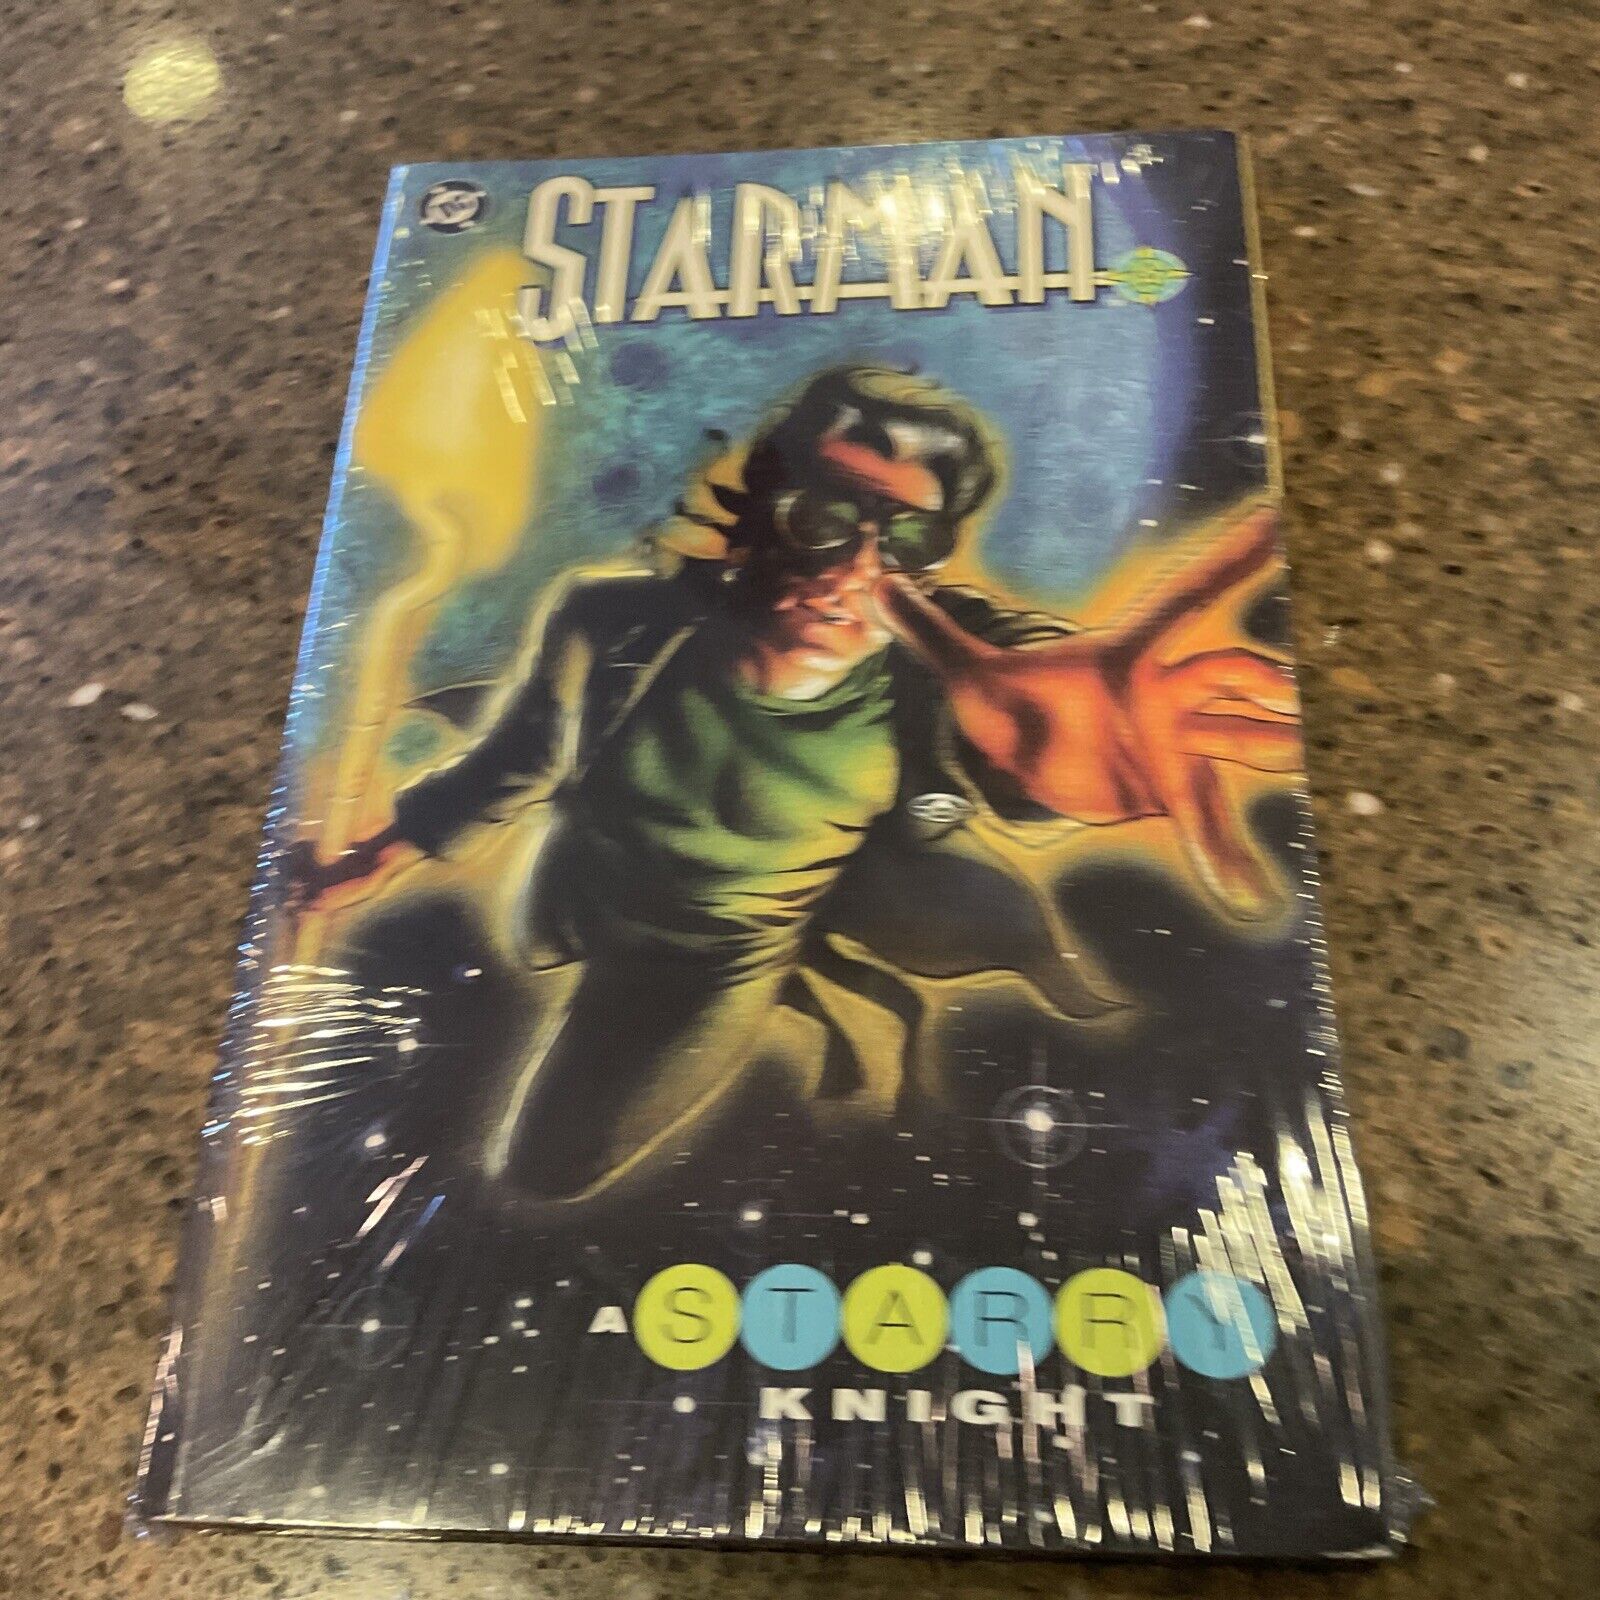 Starman-A Starry Knight (1999) DC TPB By Robinson DC Comics Trade Paperback